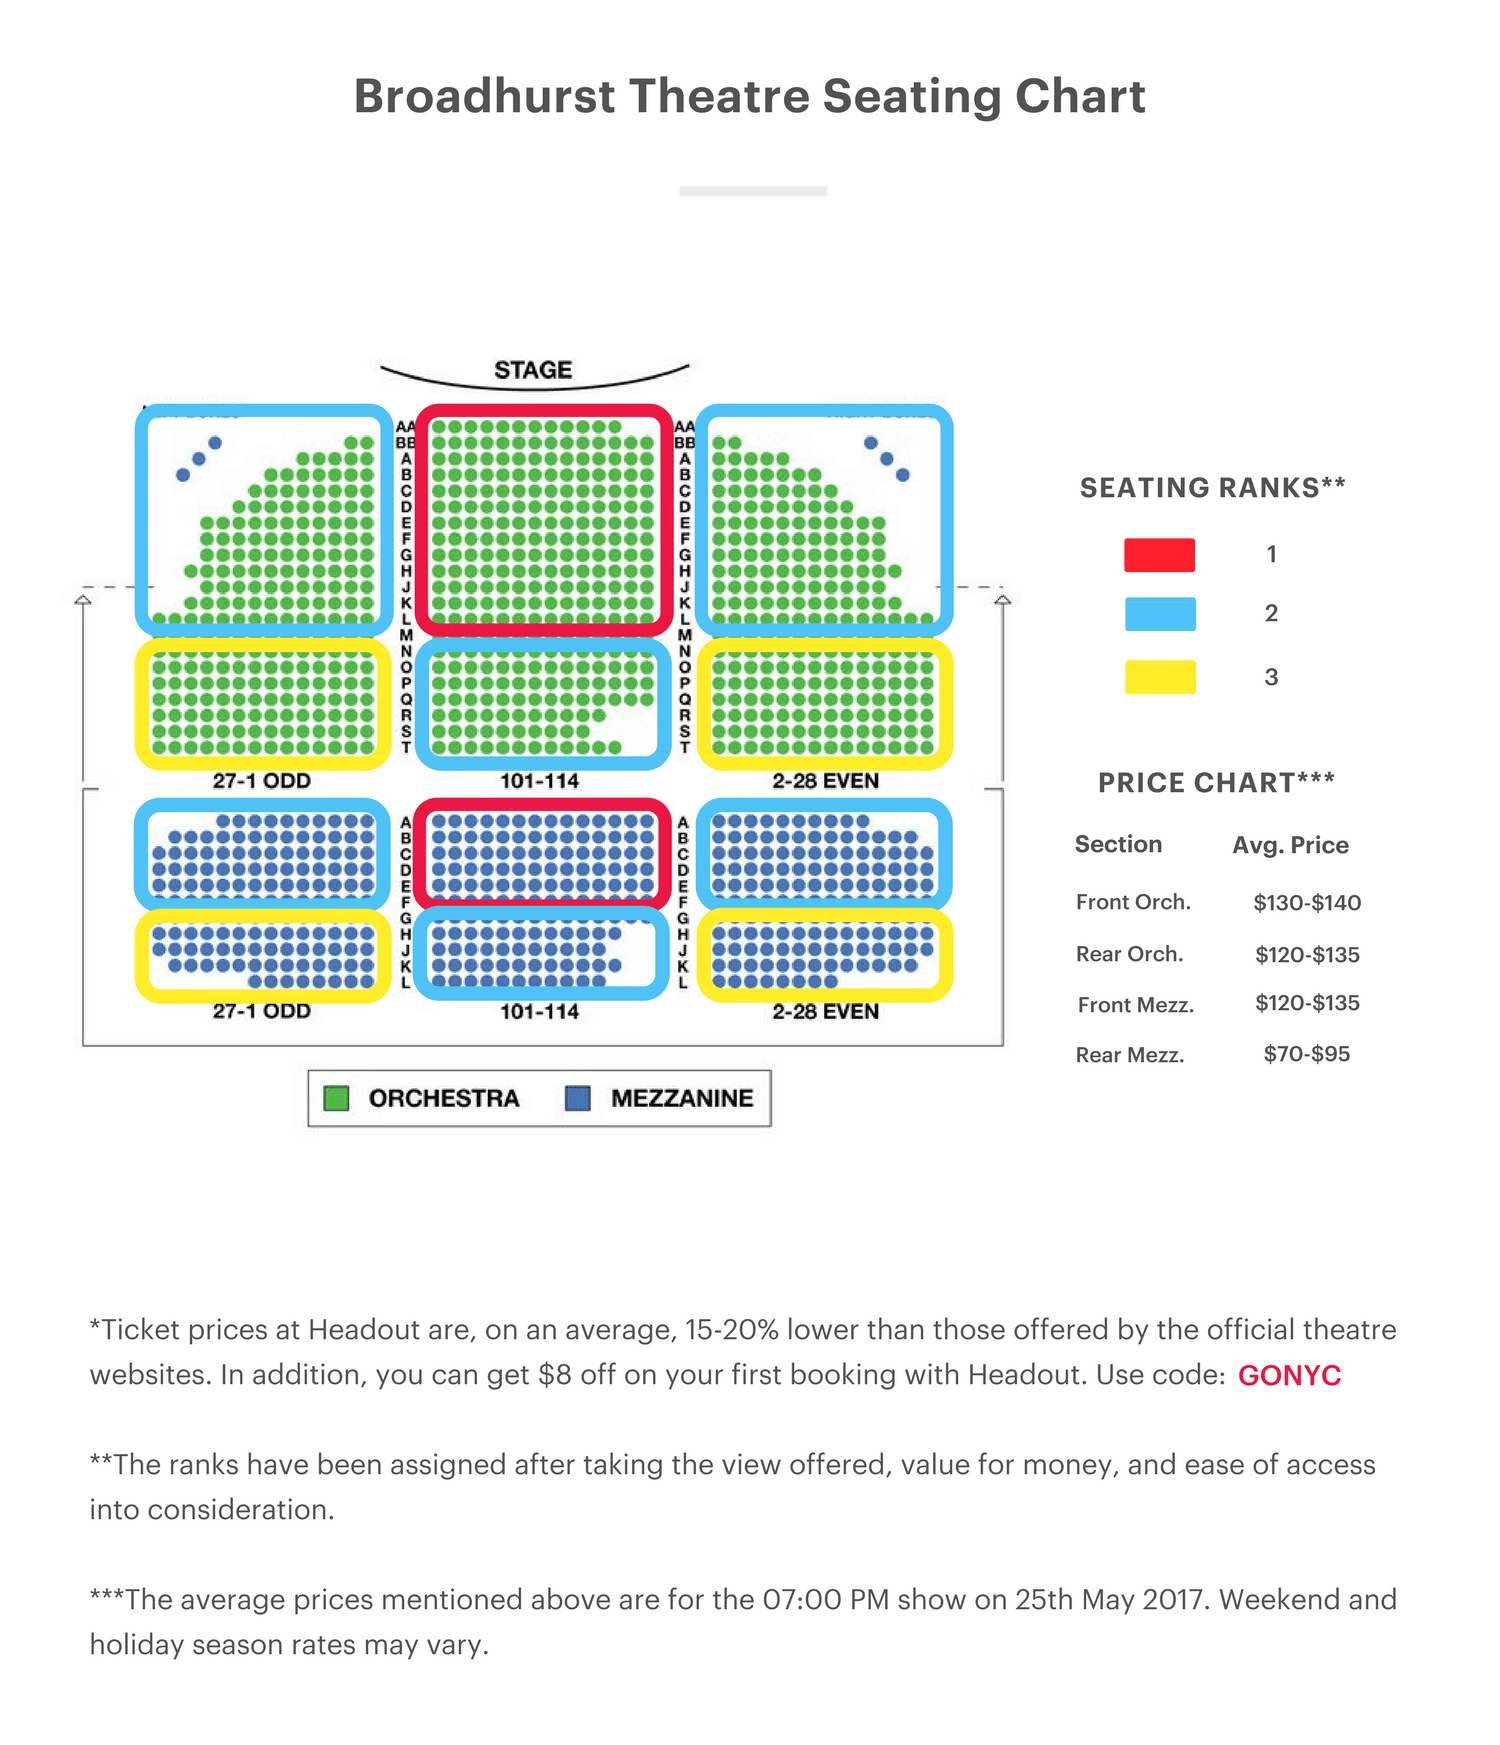 Gershwin Theatre Seating Chart Best Seats